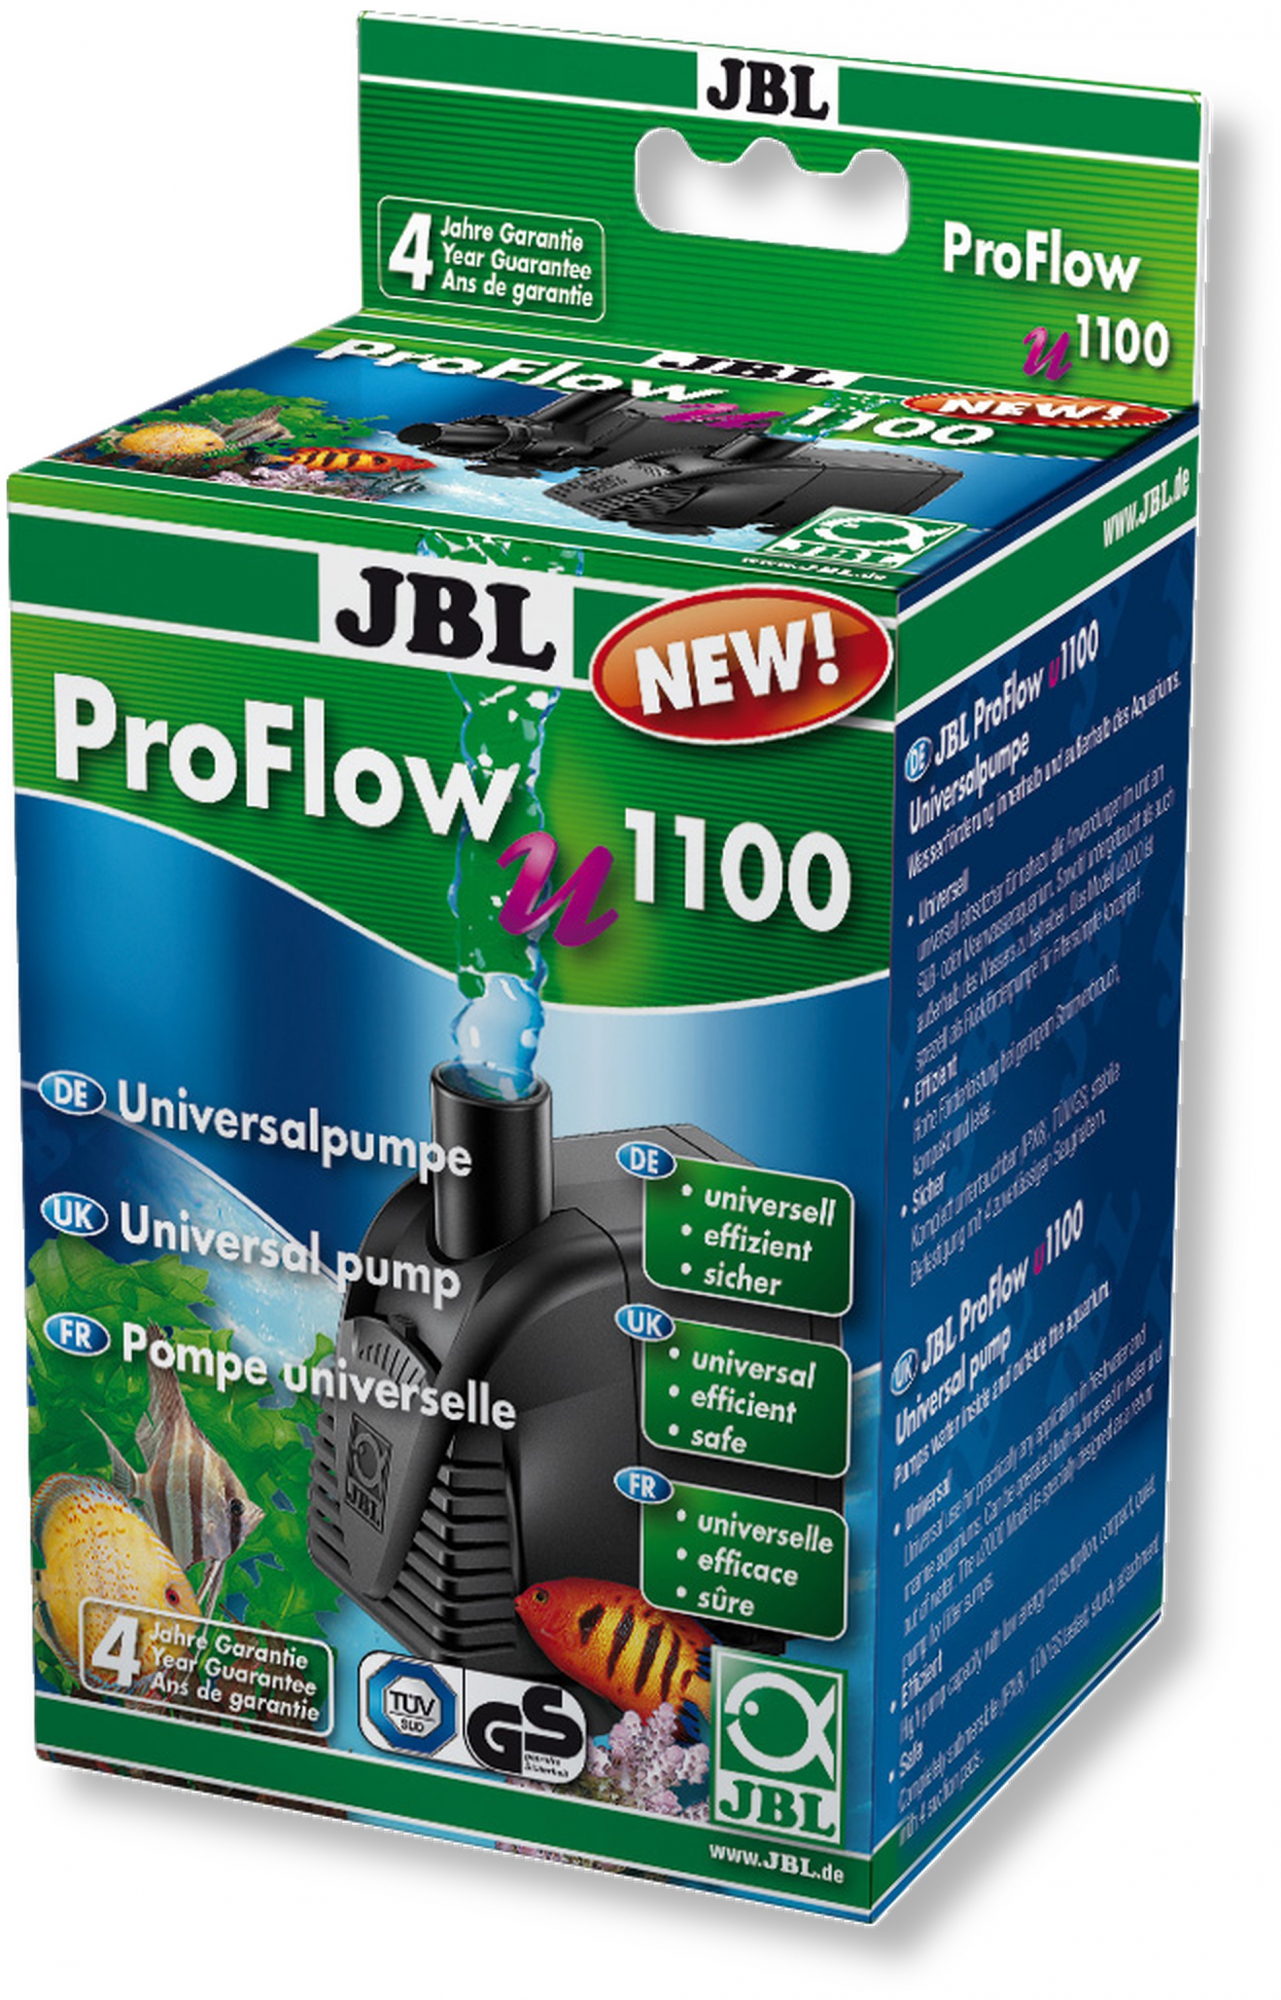 JBL Proflow Bomba universal - varios modelos disponibles